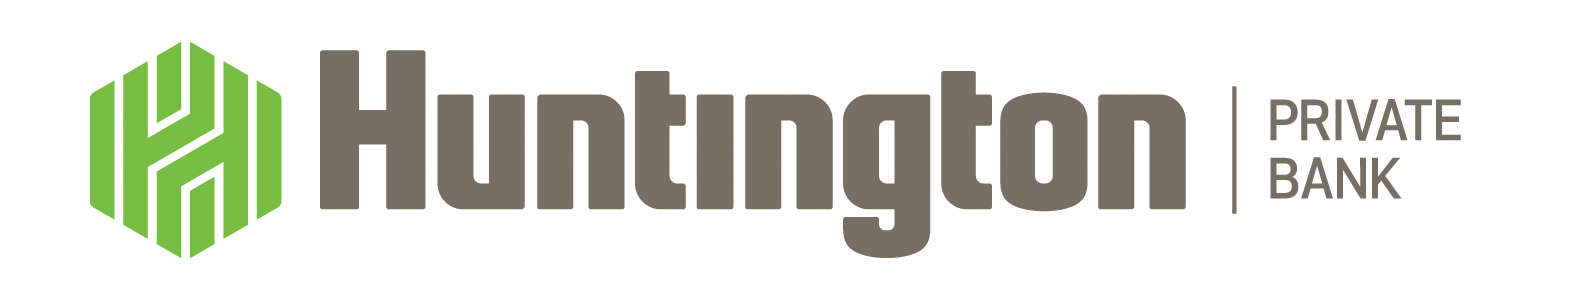 Logo for sponsor Huntington National Bank